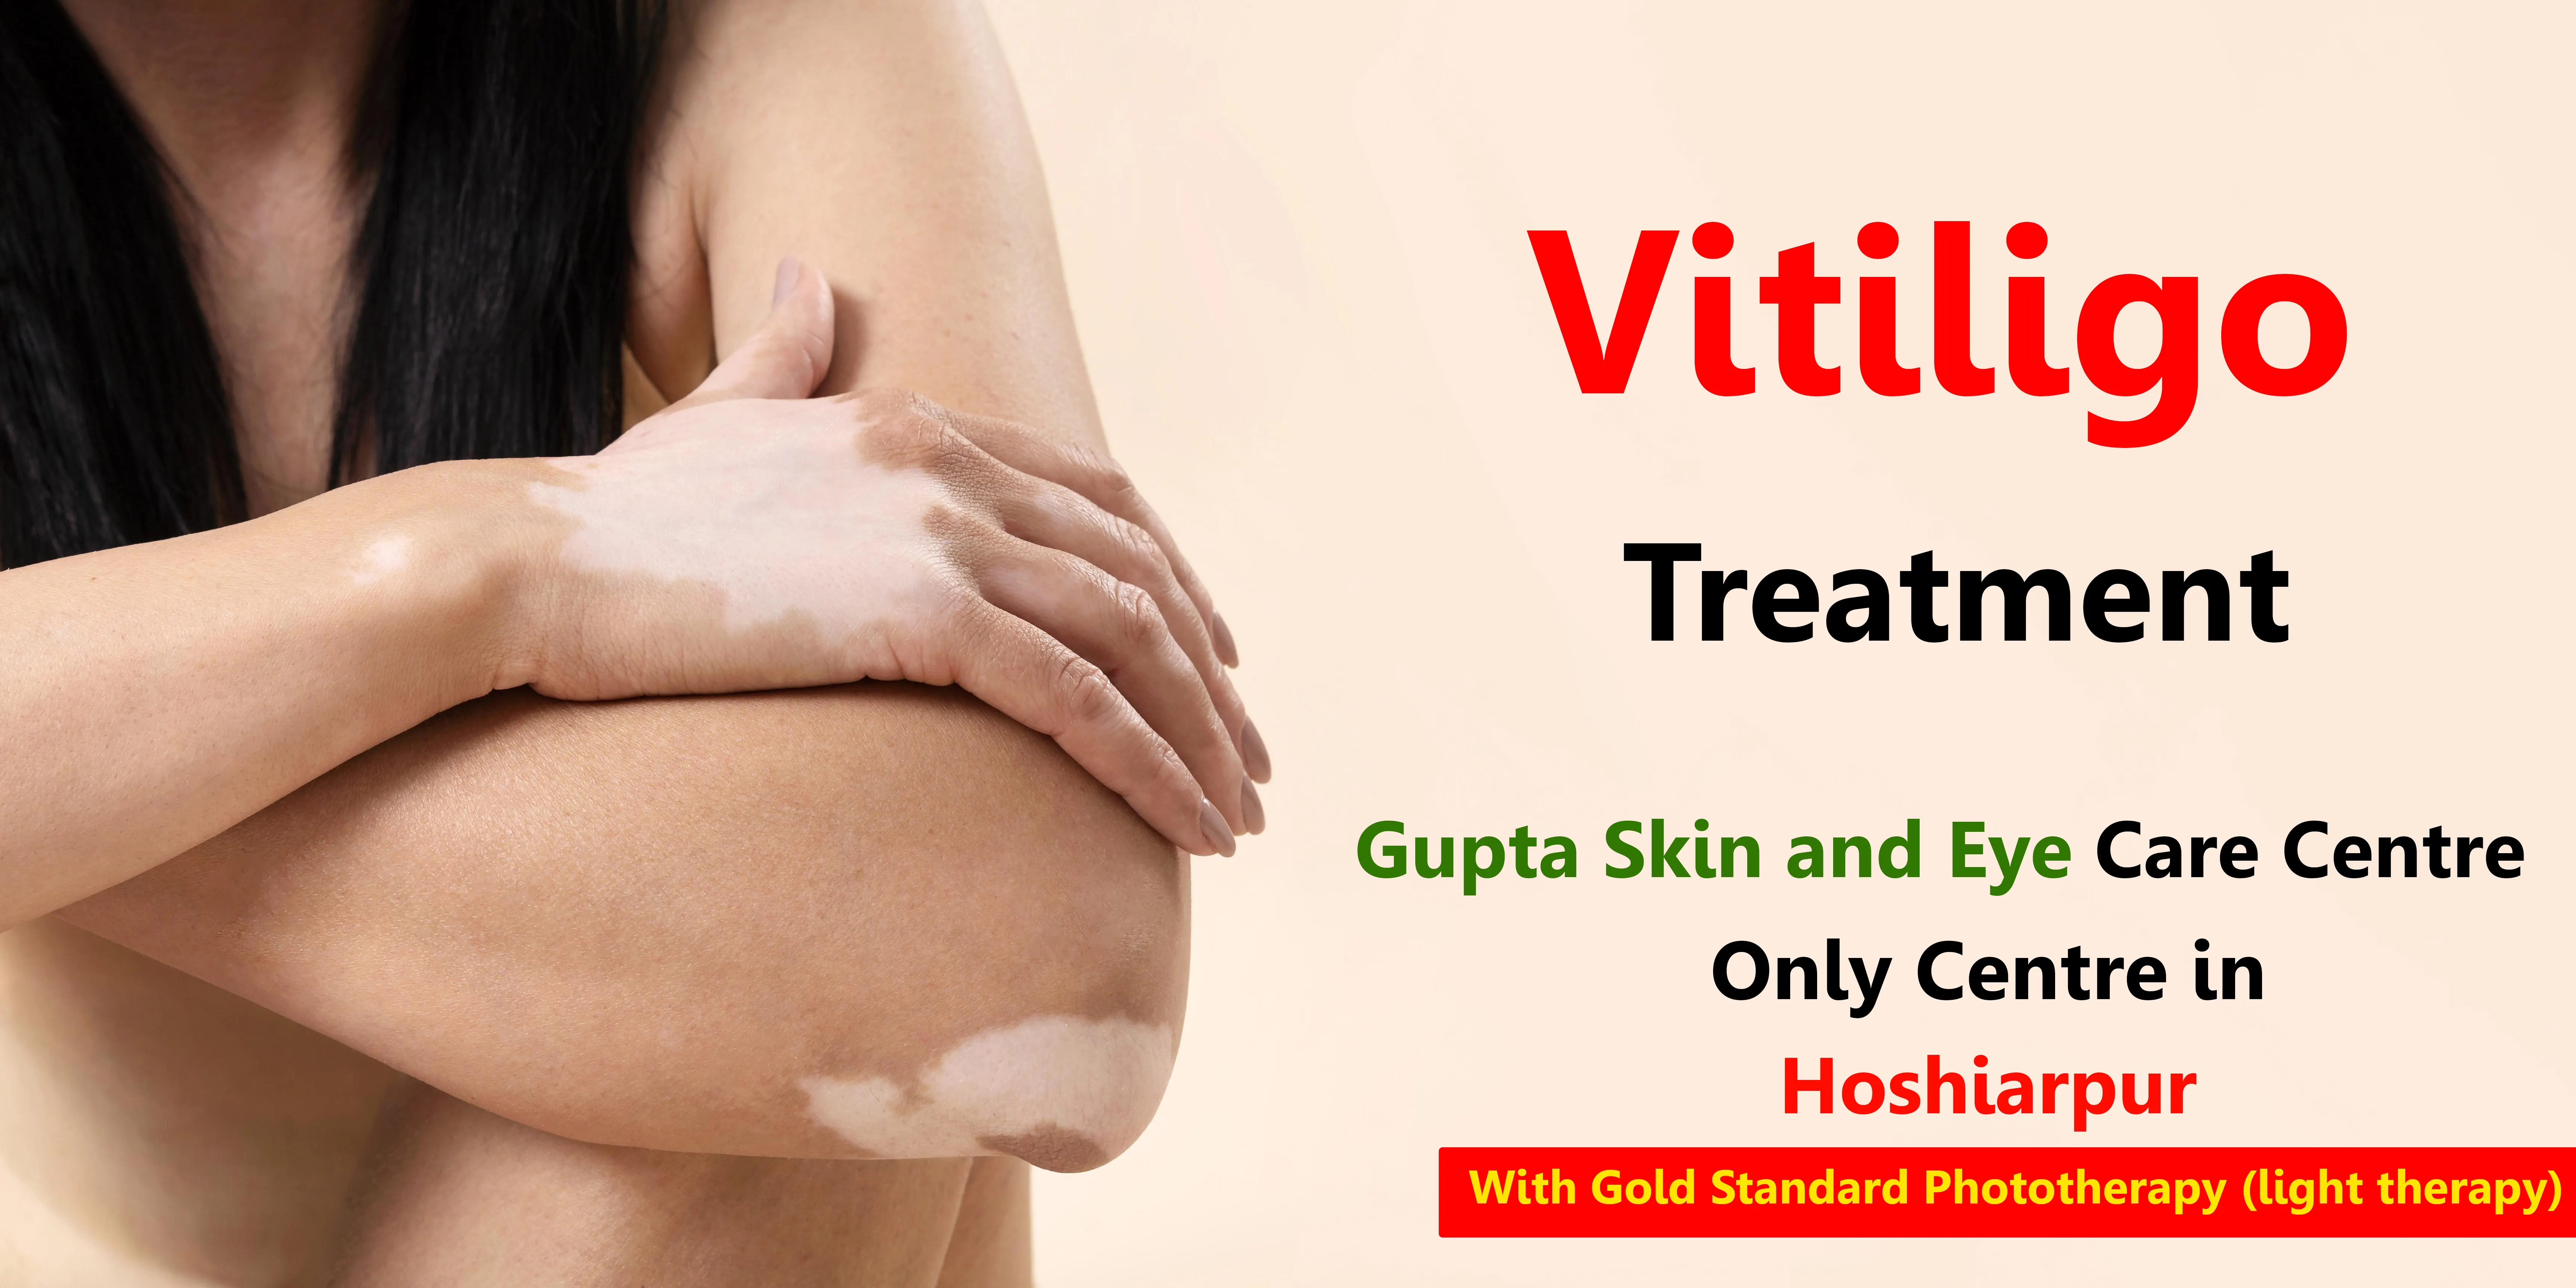 Vitiligo Treatment